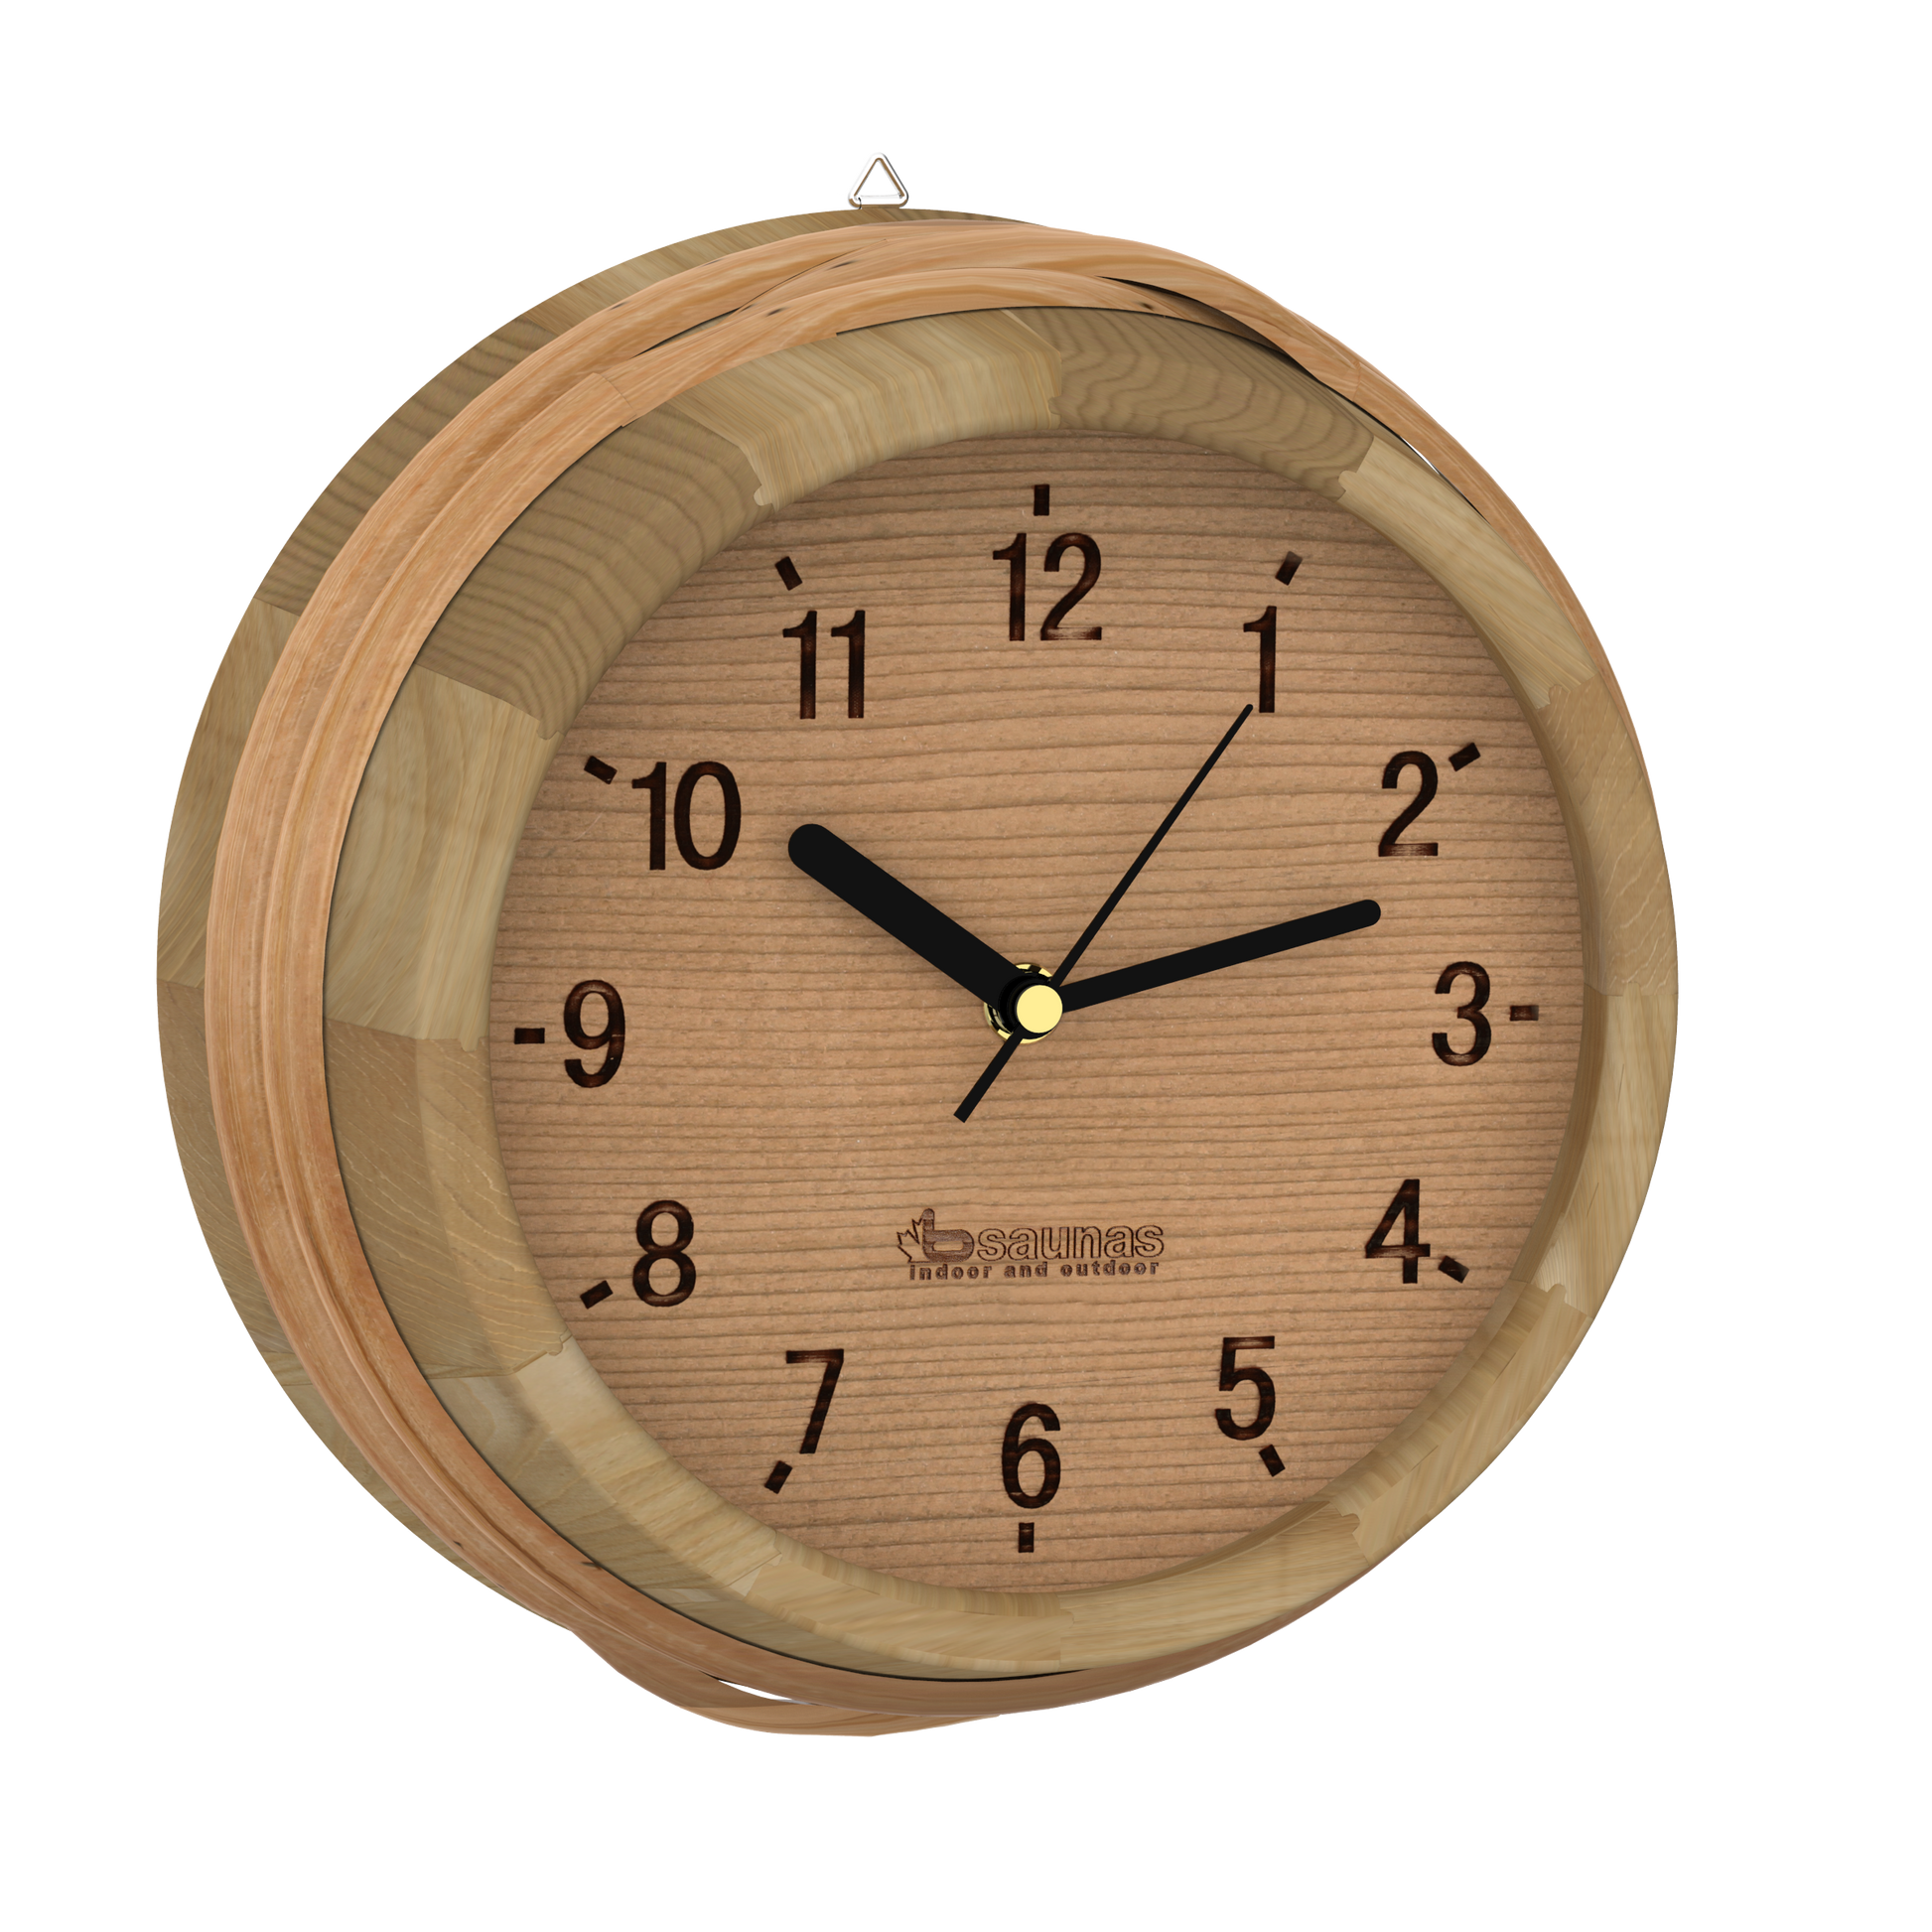 Traditional cedar sauna clock